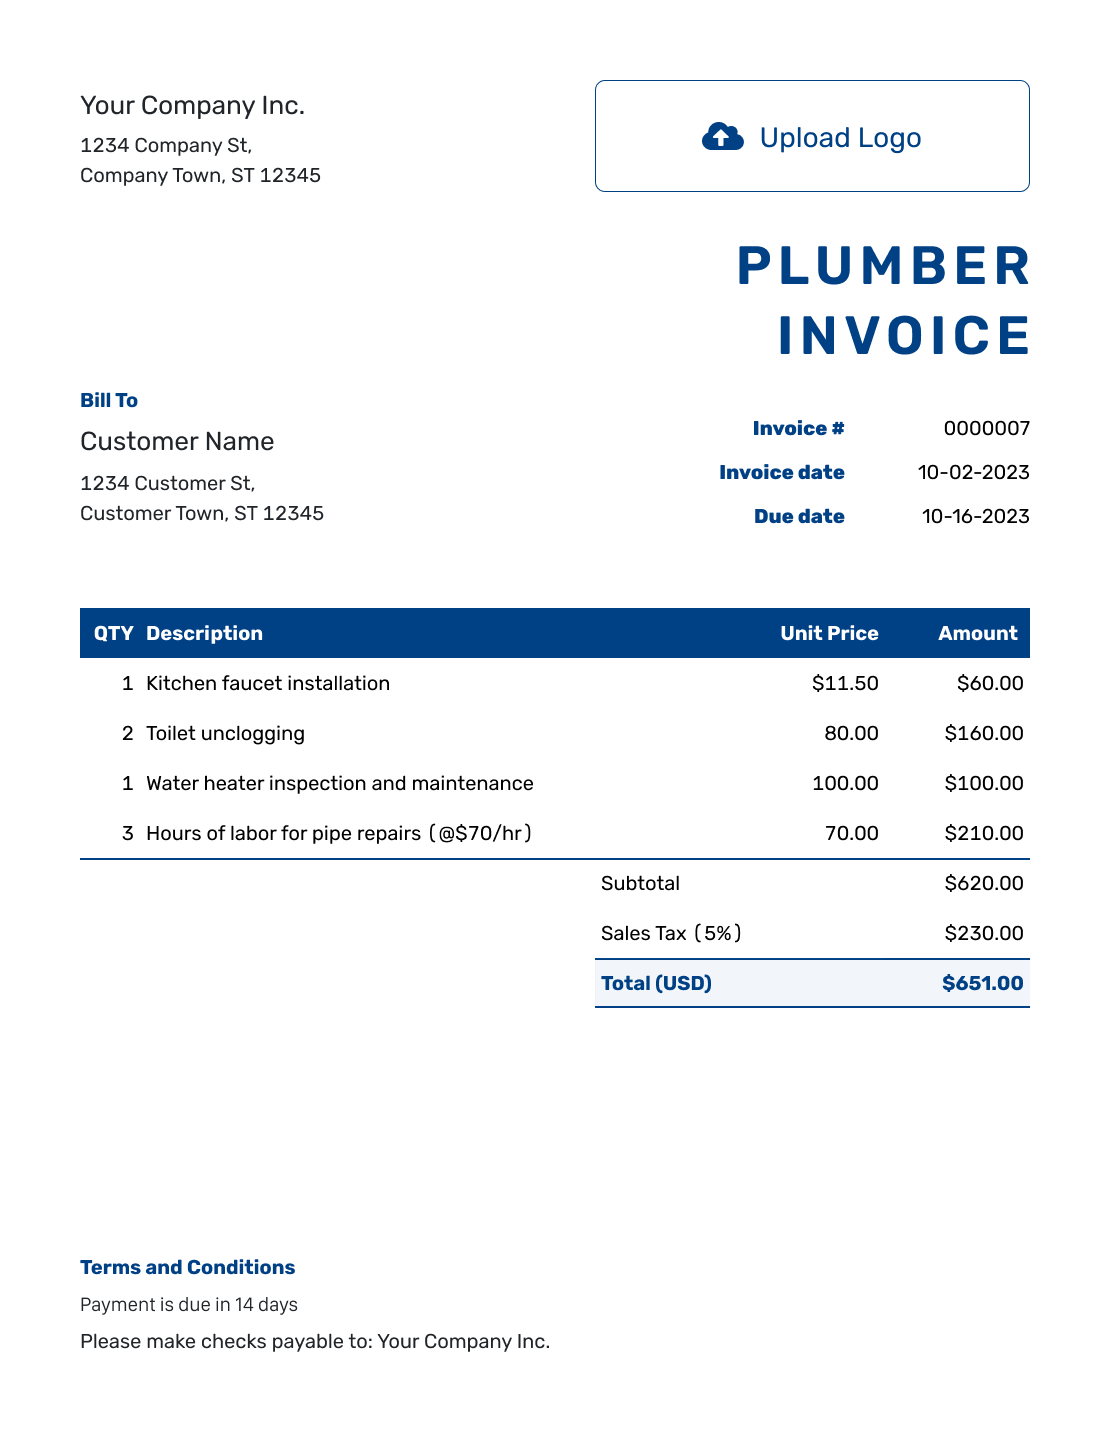 Sample Plumber Invoice Template